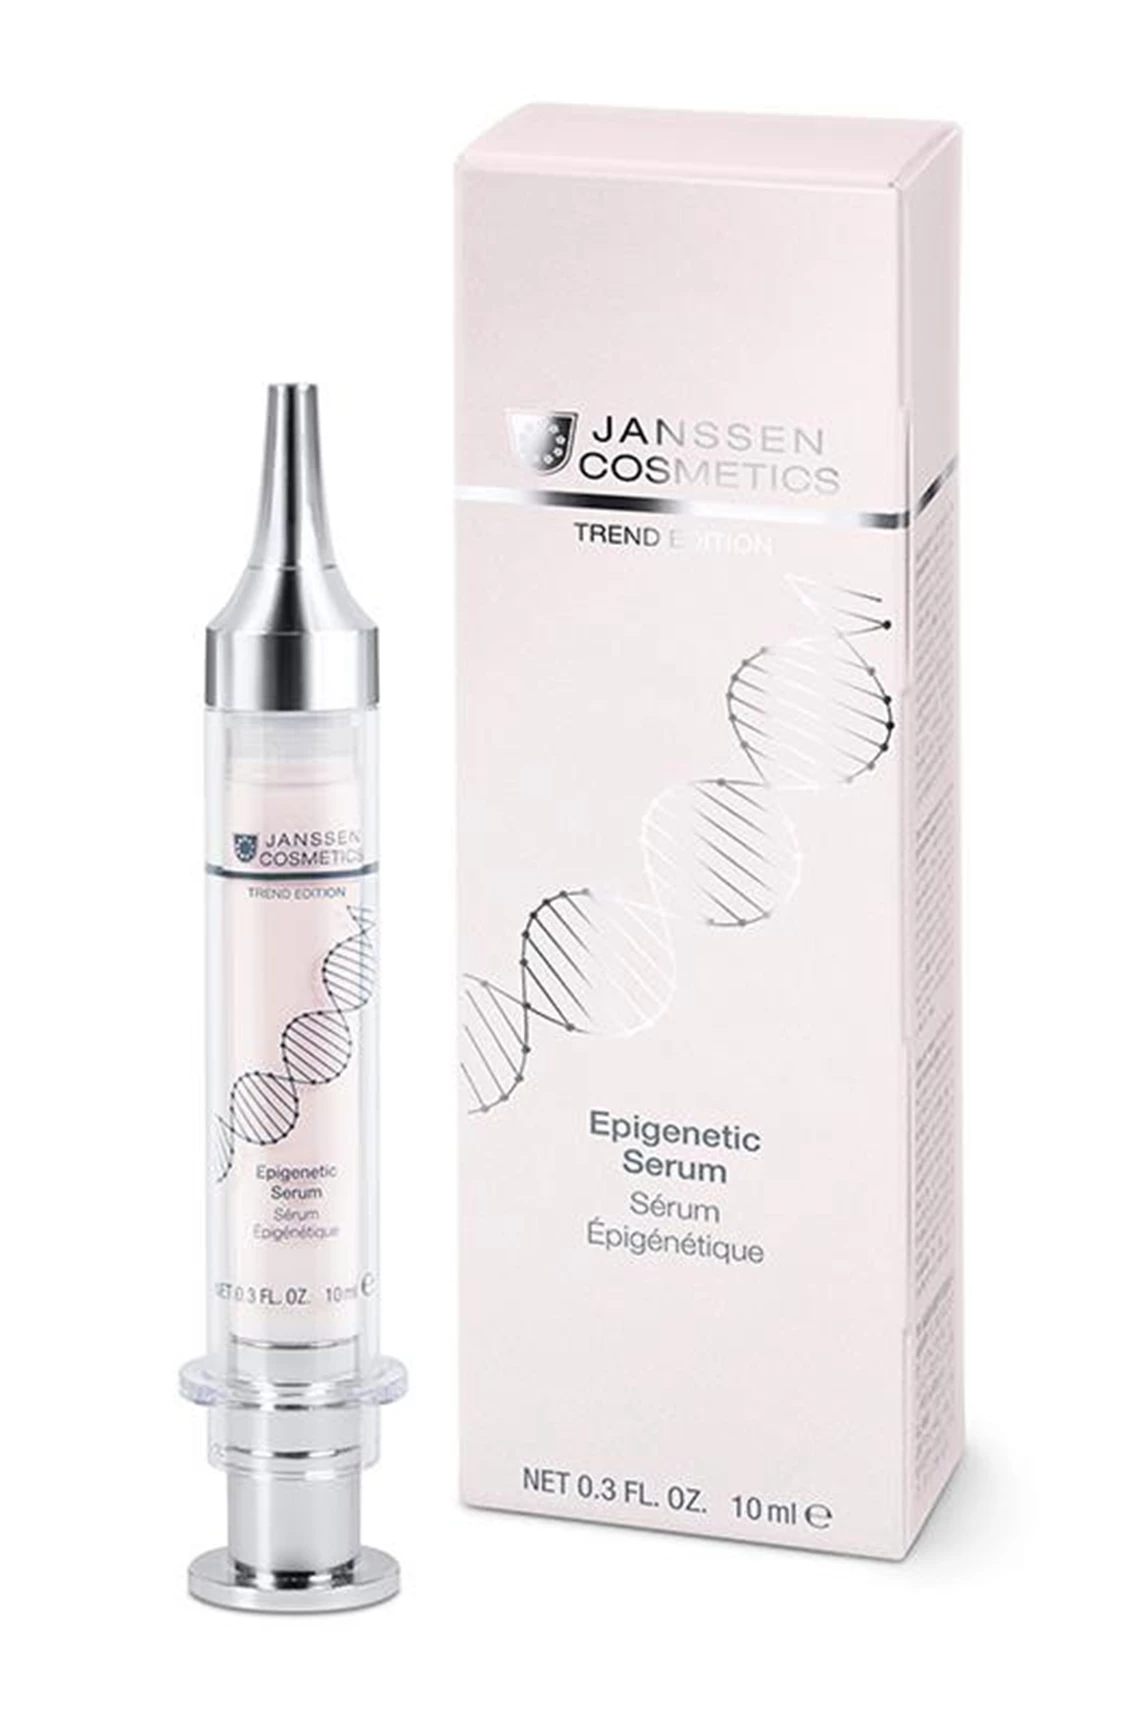 Epigenetic Serum by Janssen Cosmetics